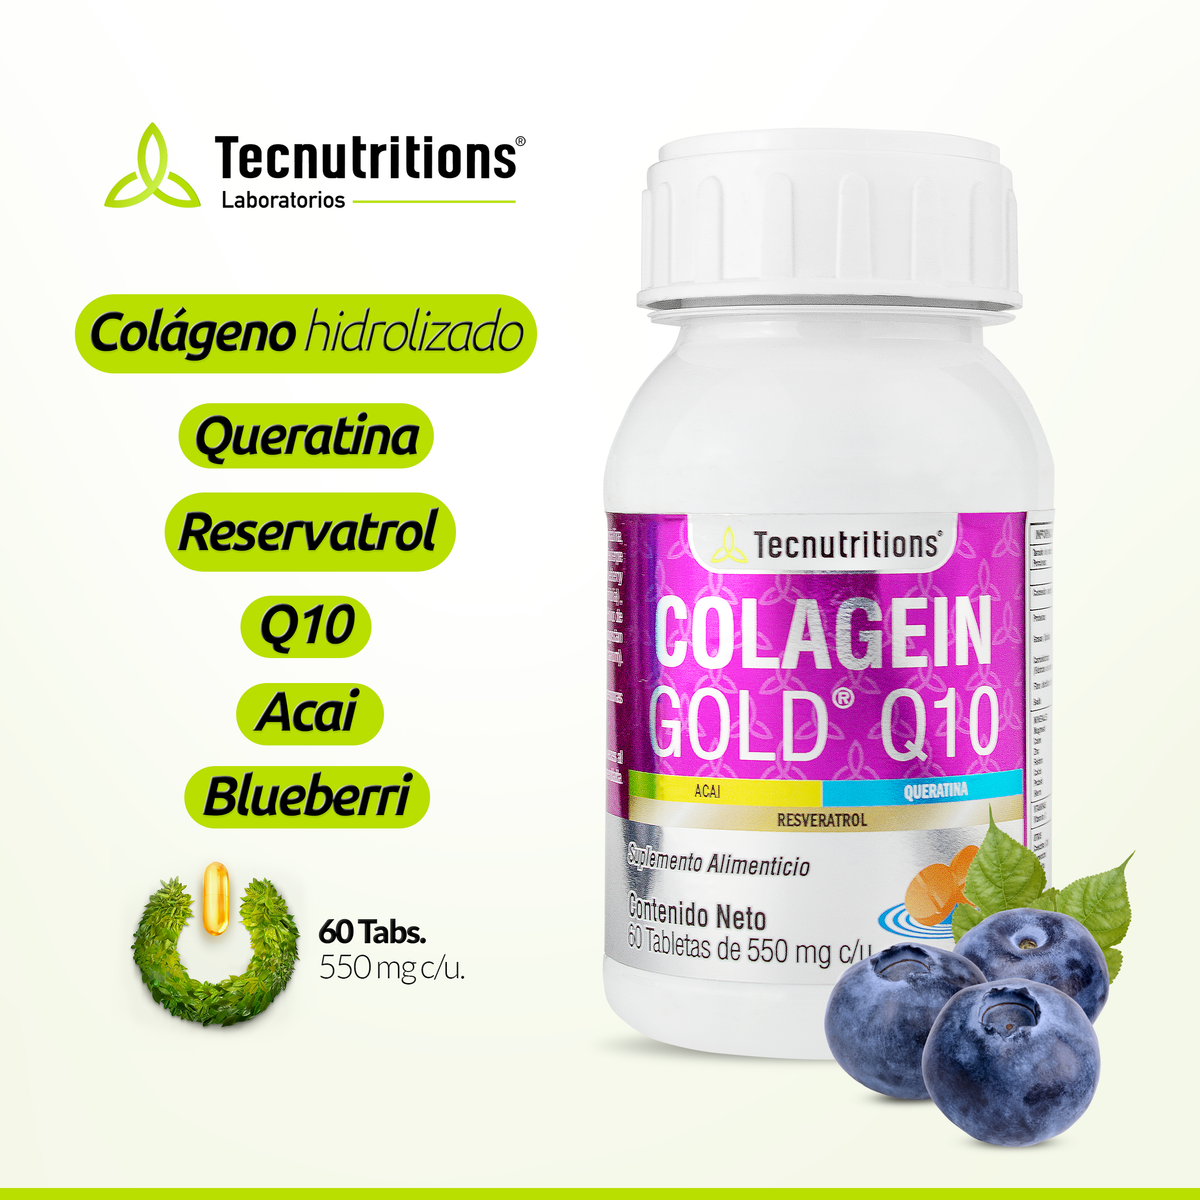 Suplemento alimenticio Colagein Gold Q10, 60 tabs, con colágeno hidrolizado, Q10, queratina